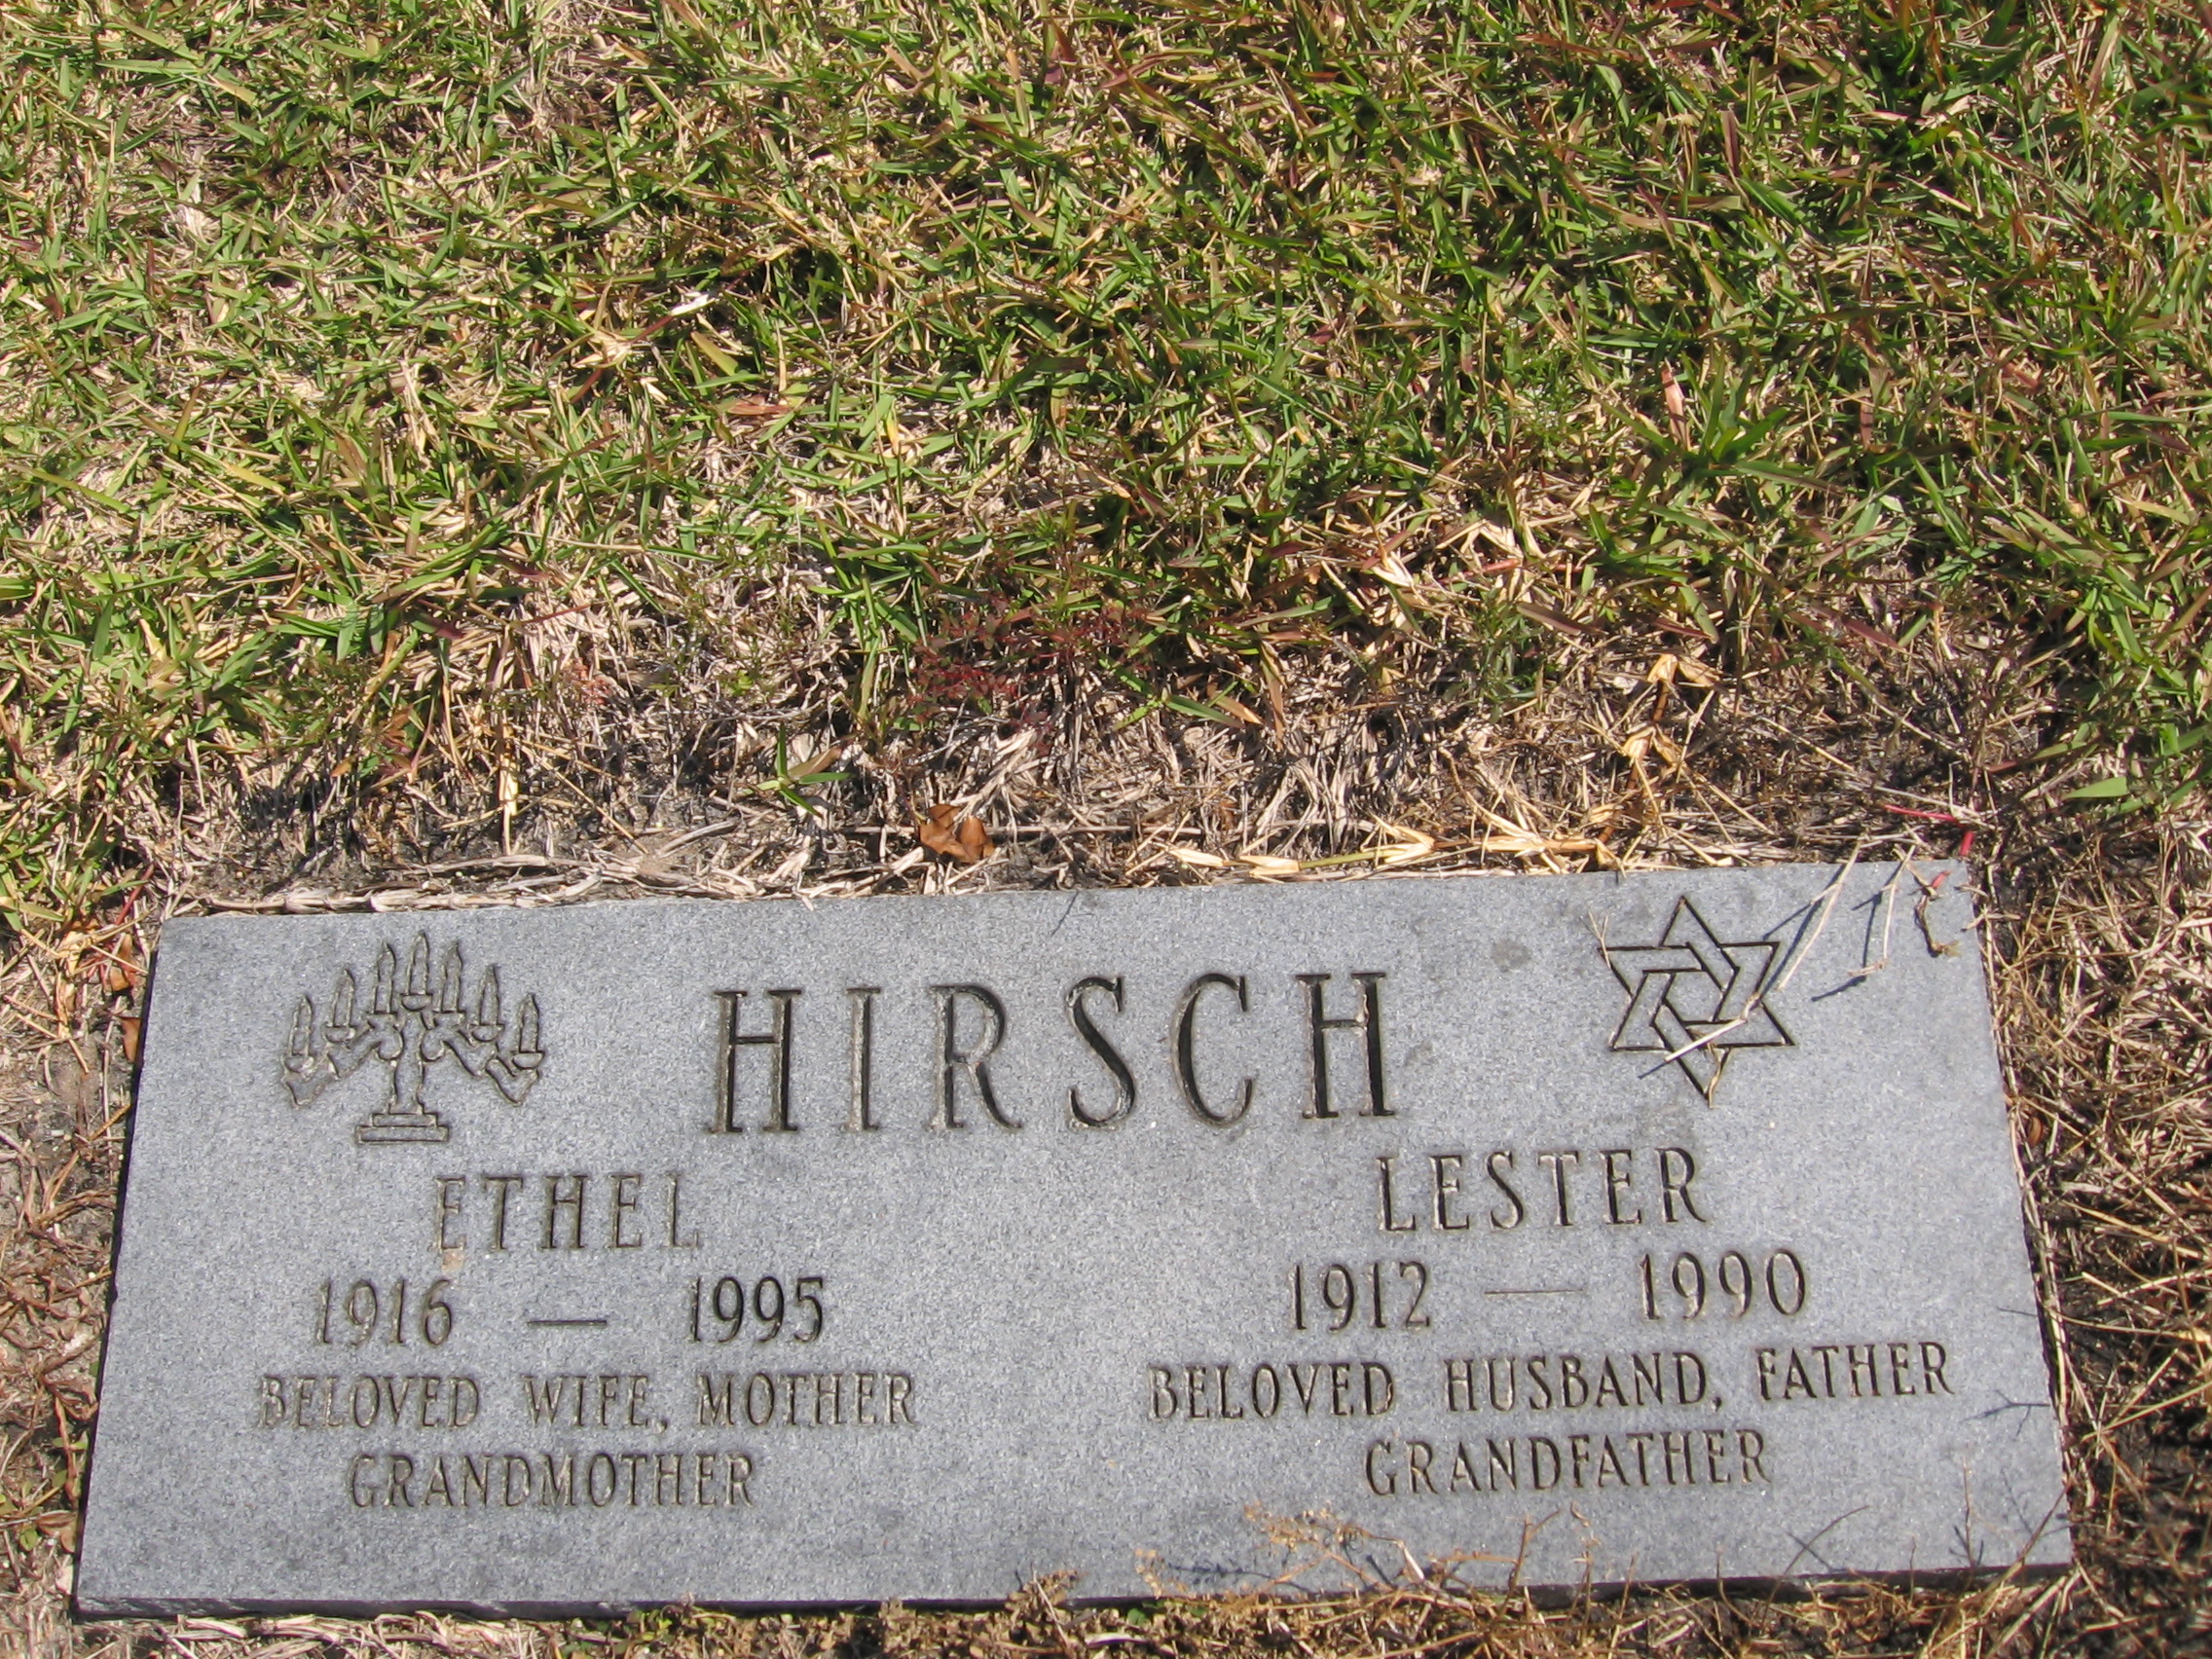 Ethel Hirsch